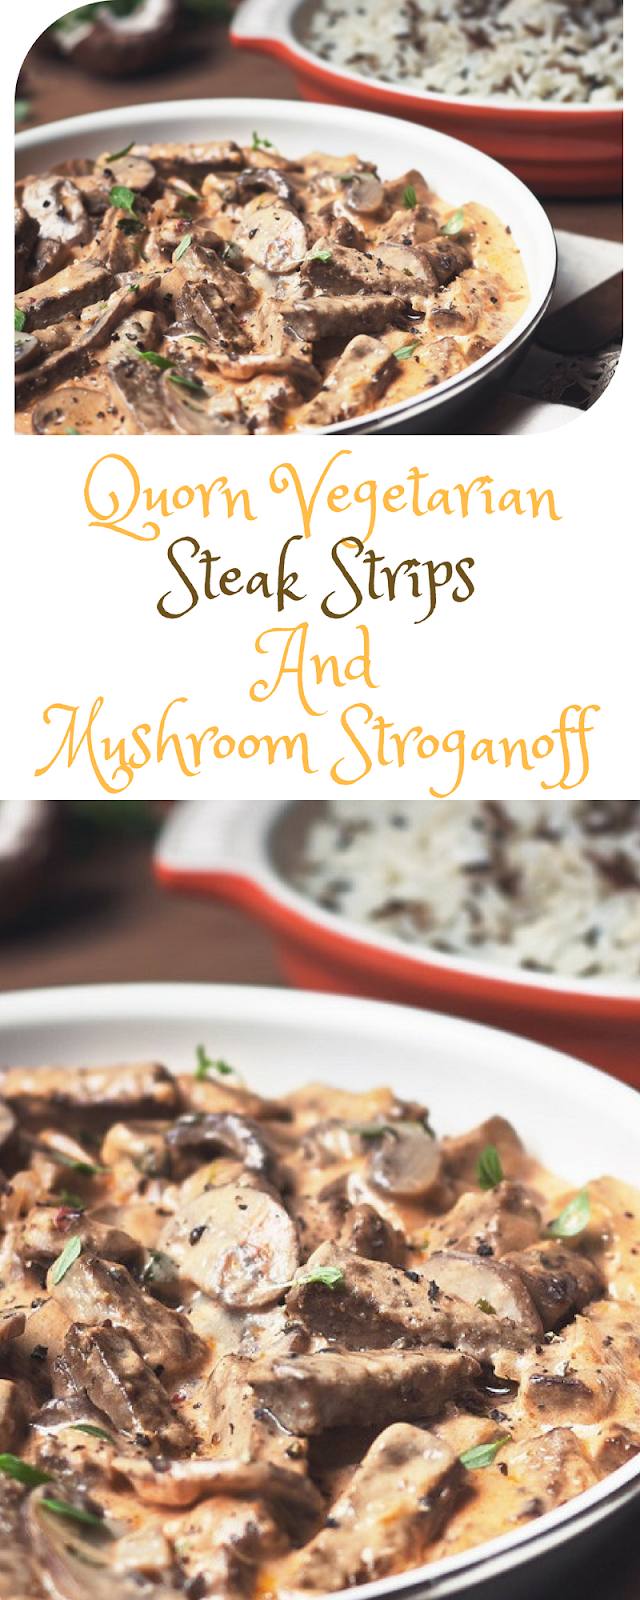 Quorn Vegetarian Steak Strips And Mushroom Stroganoff